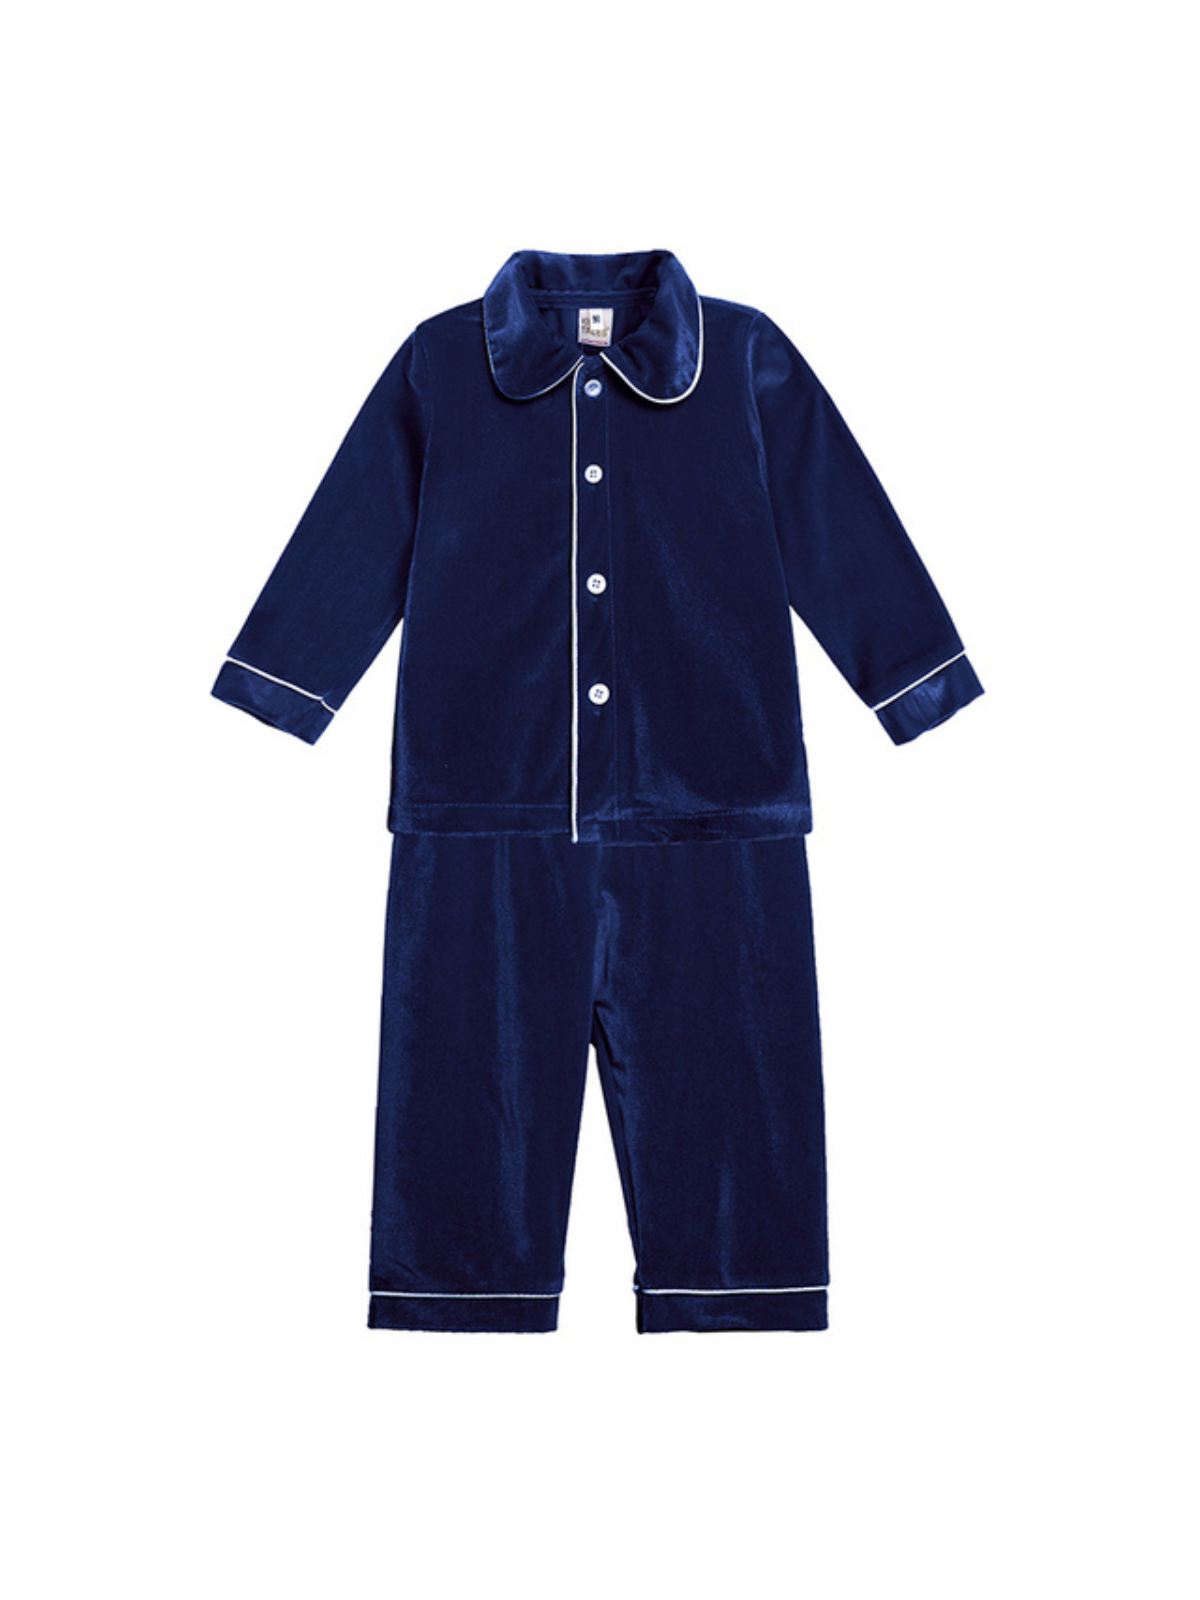 Toddler Clothing Sale | Kids Silk Velvet Pajama Set | Girls Boutique